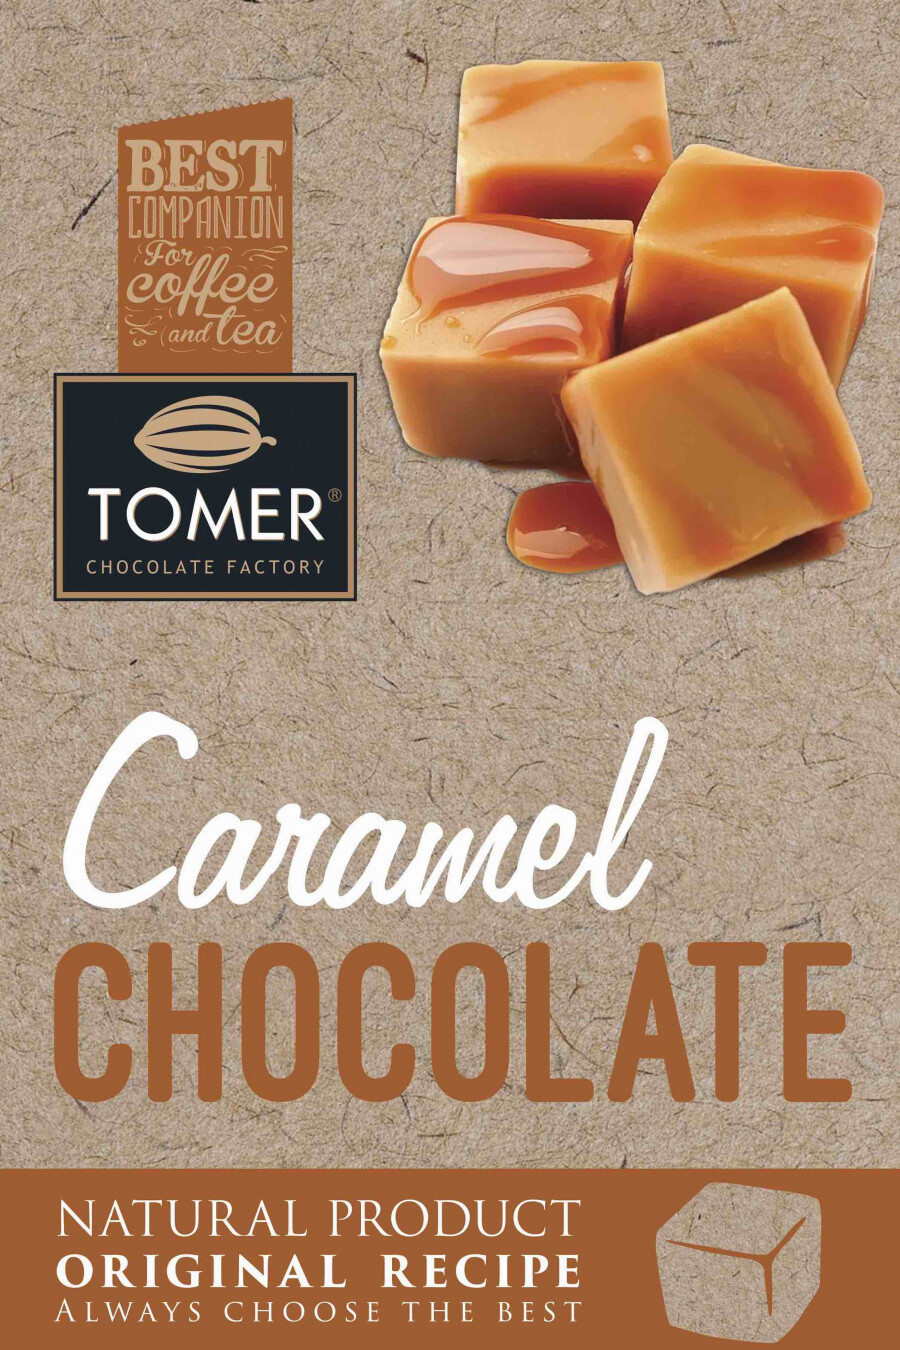 Шоколад Tomer, Caramel Chocolate, gift box